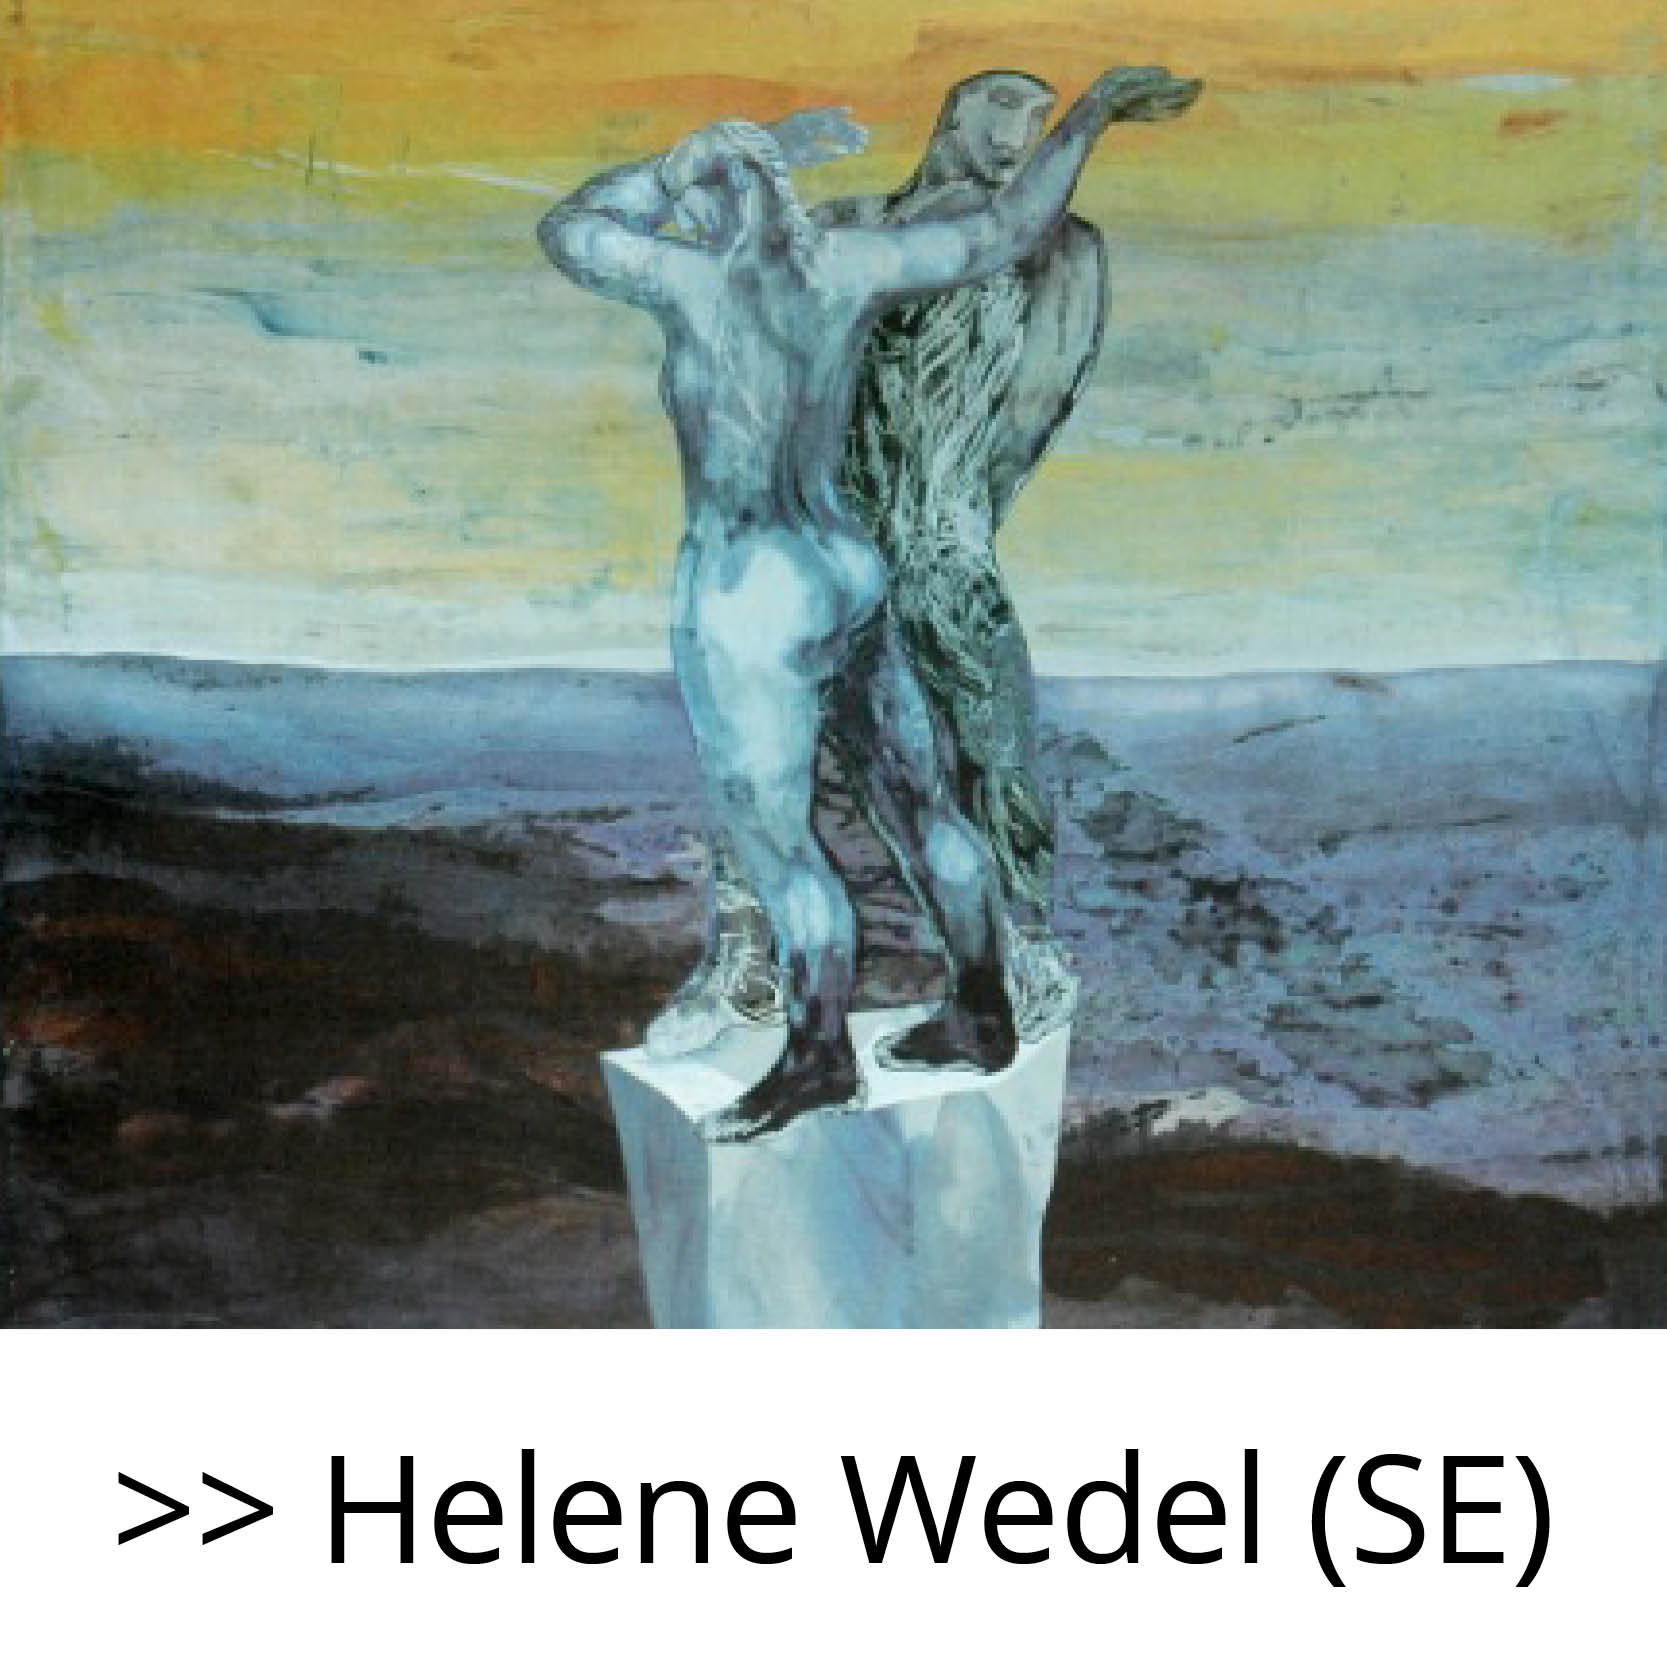 Helene_Wedel_(SE)